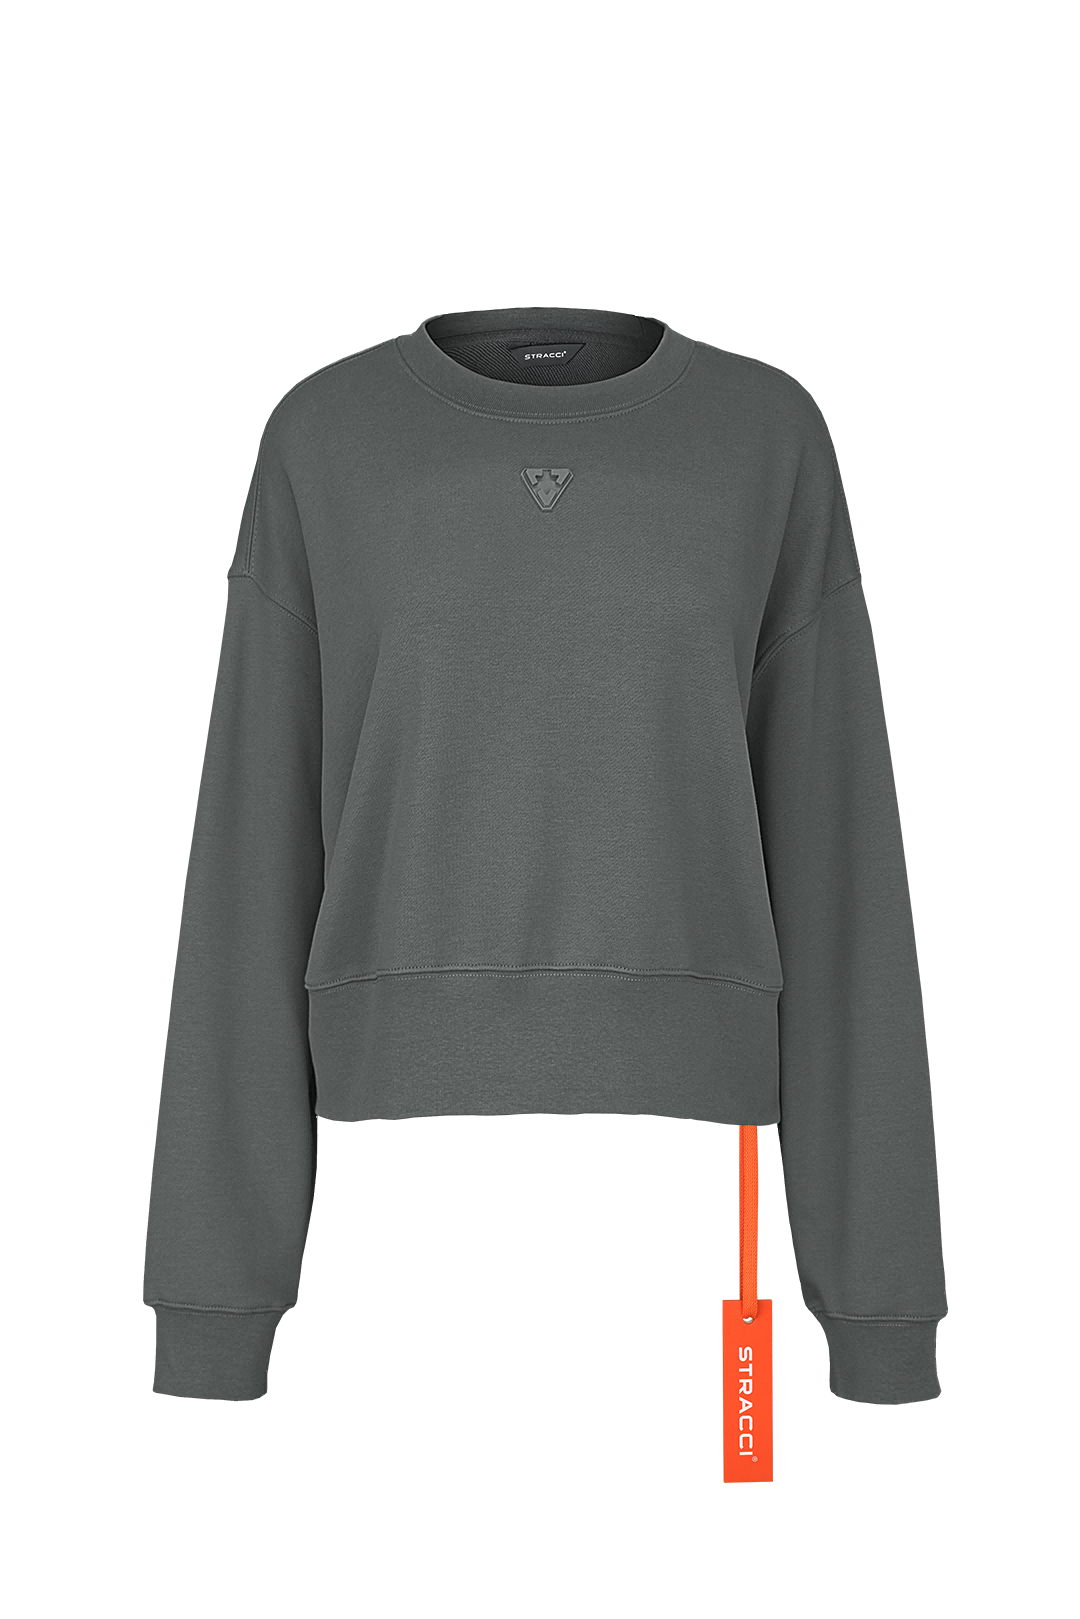 12# Arrows Women's Cropped Round Neck Sweatshirt